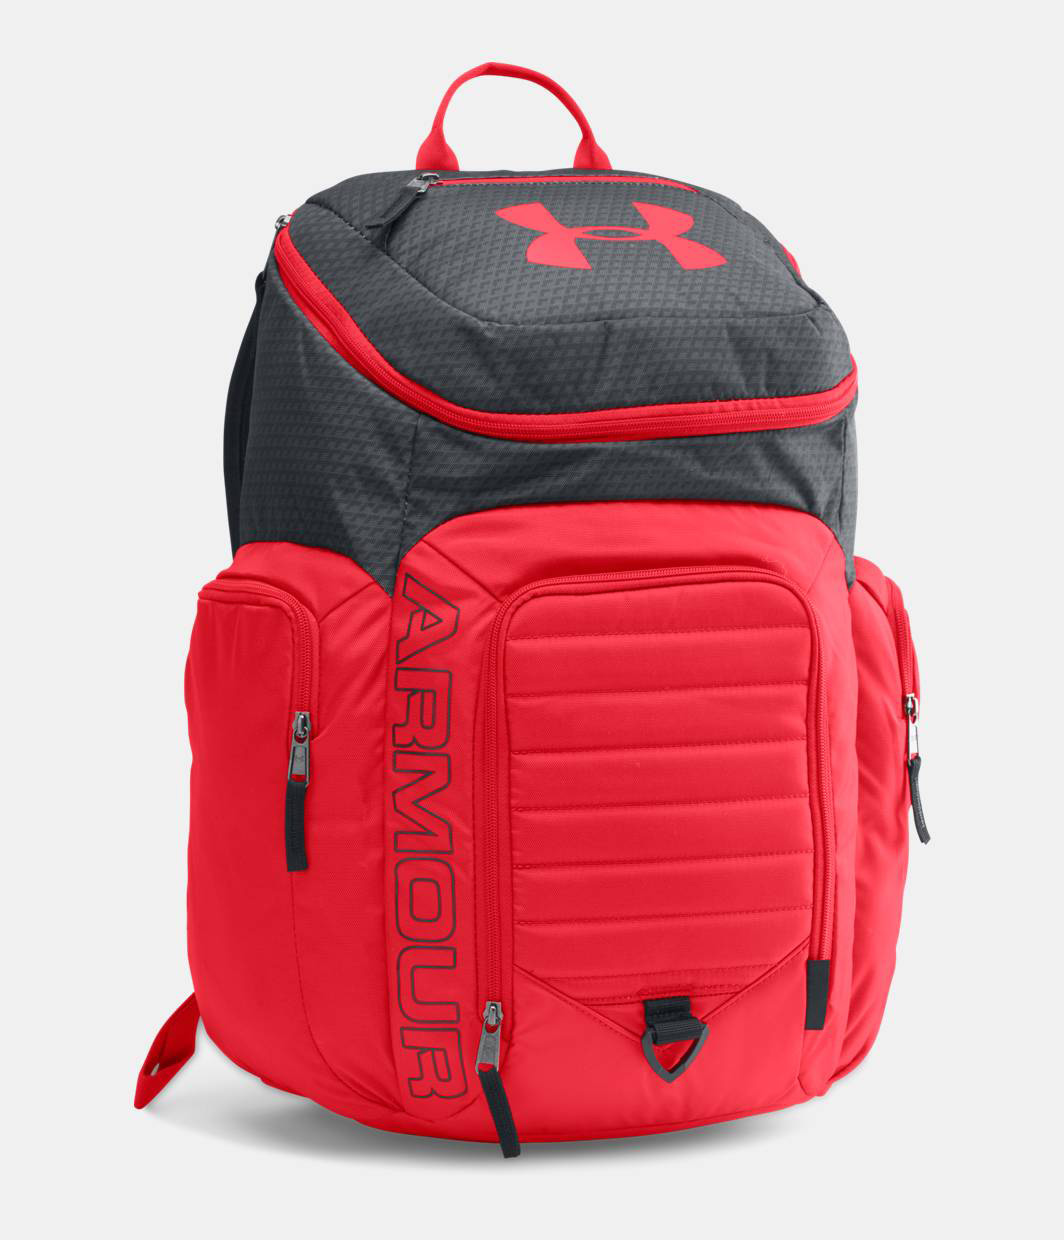 red under armor backpack